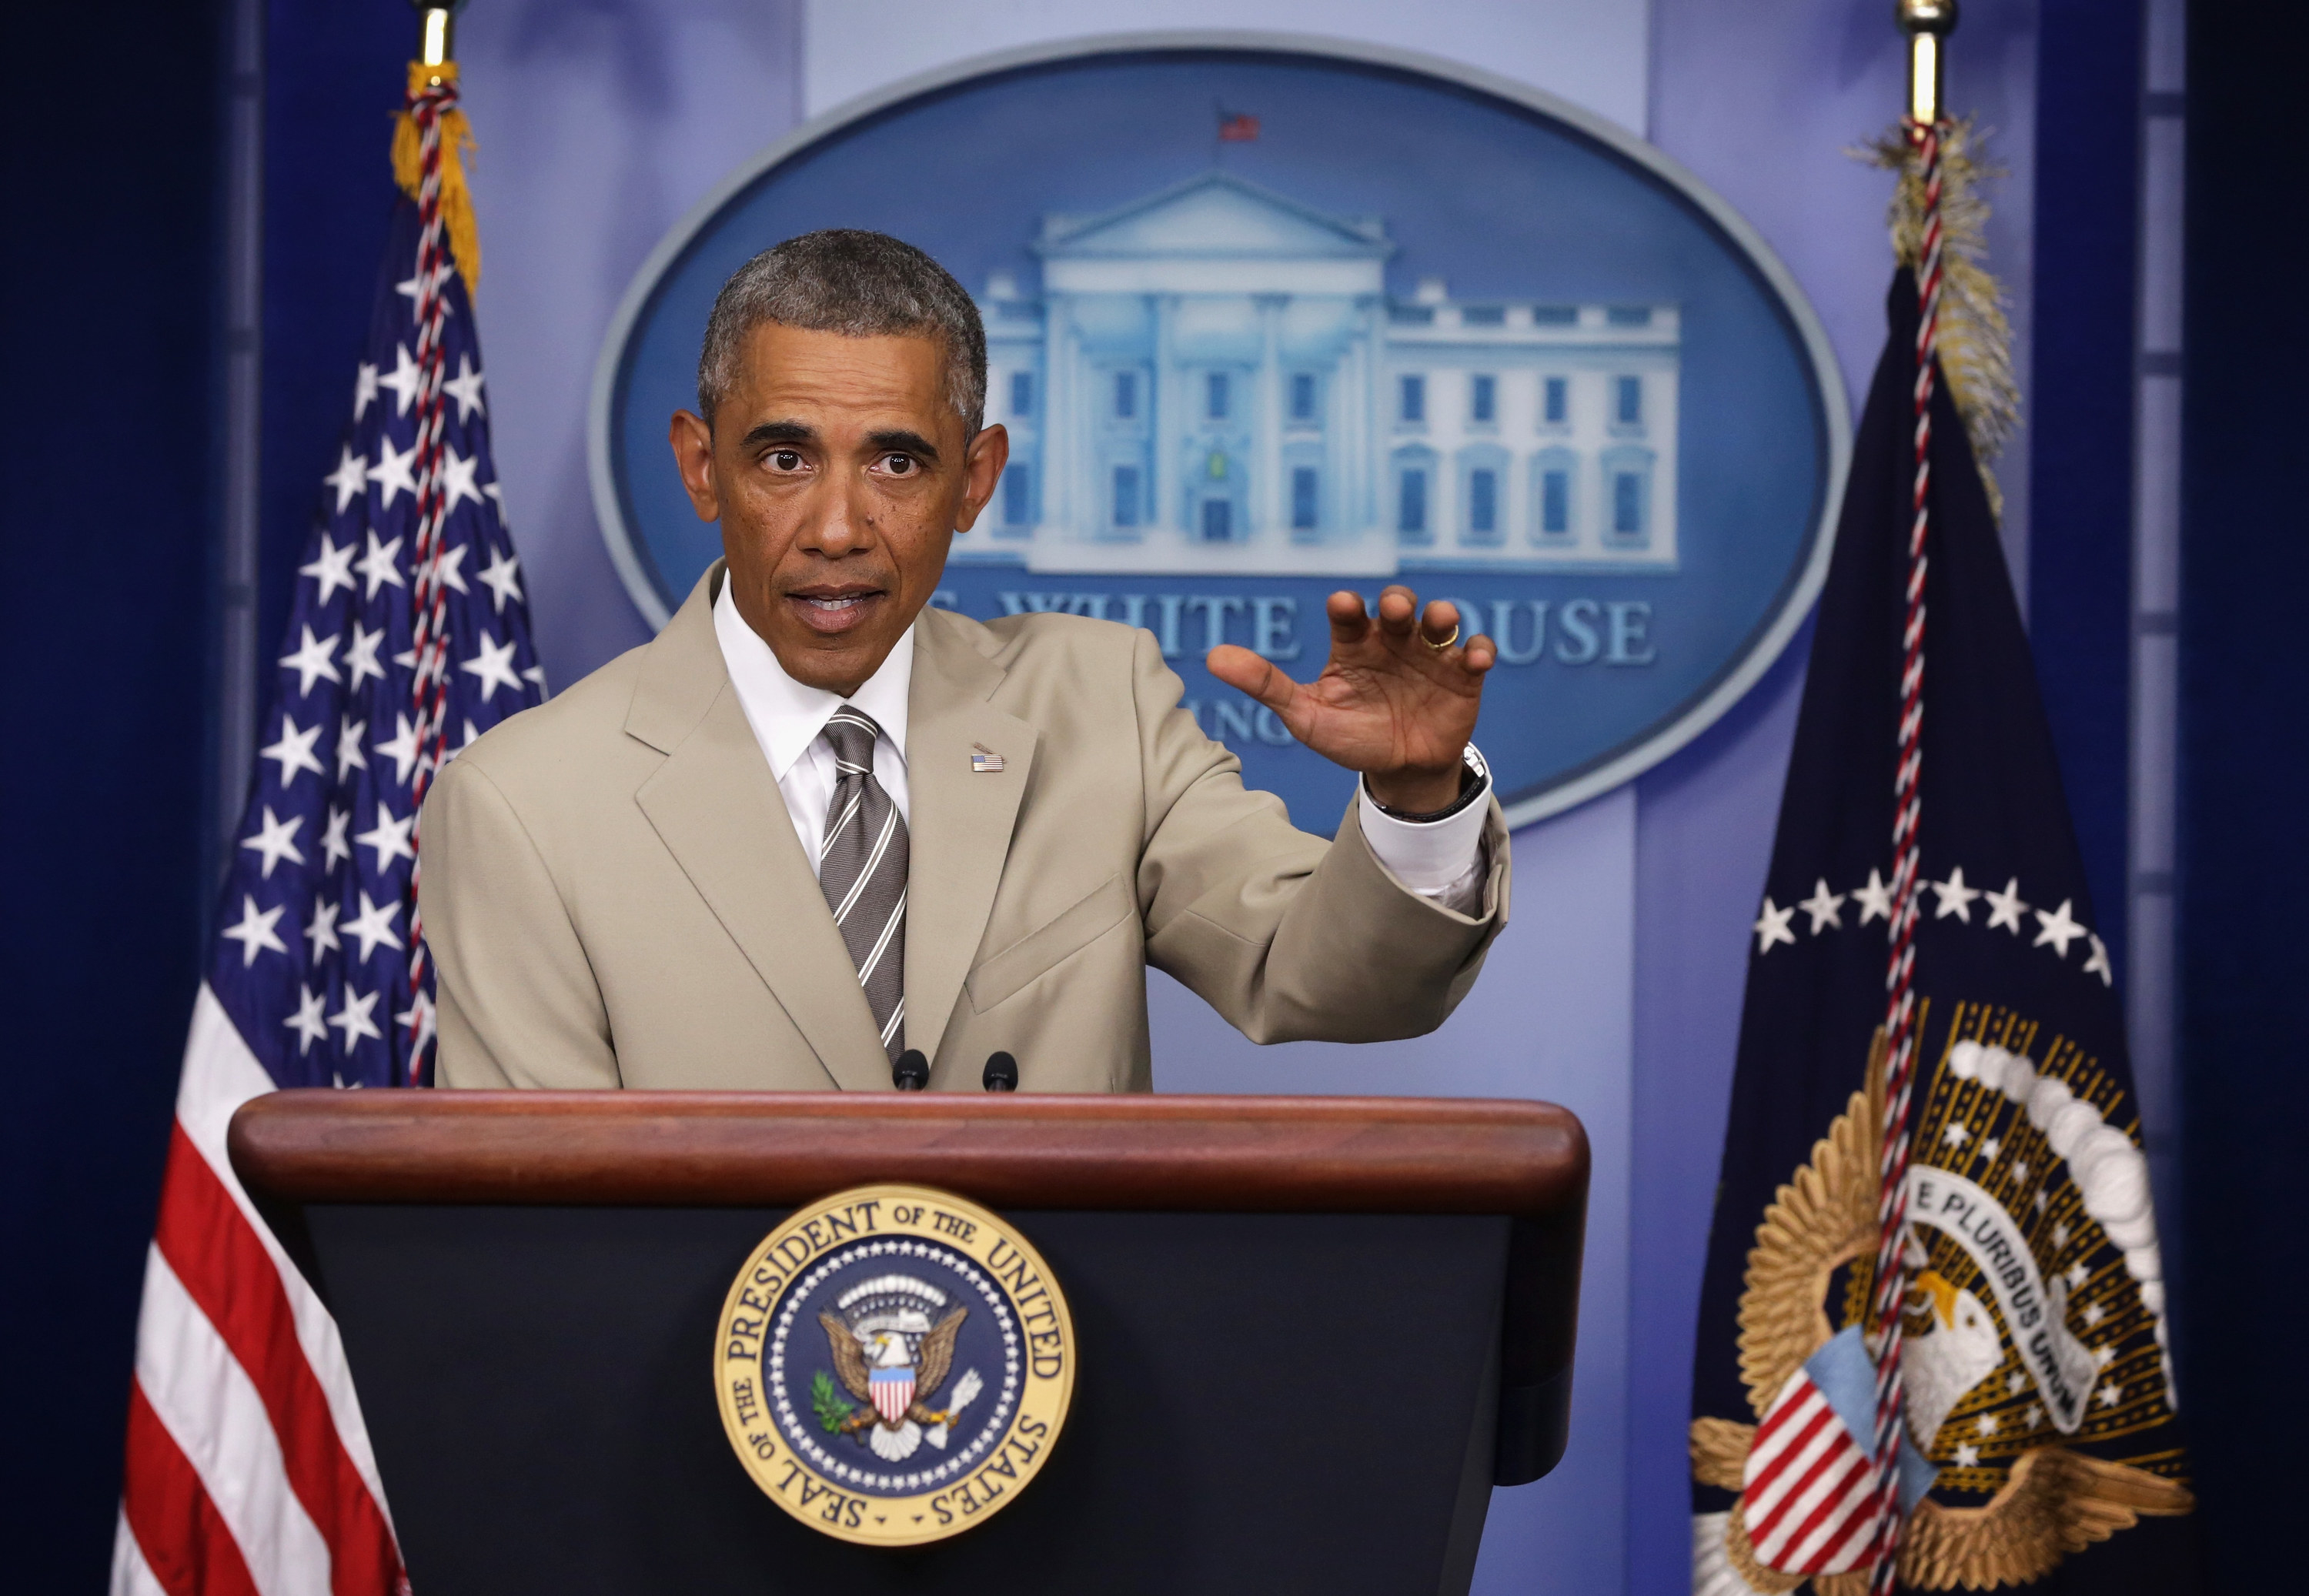 Obama wears a tan suit